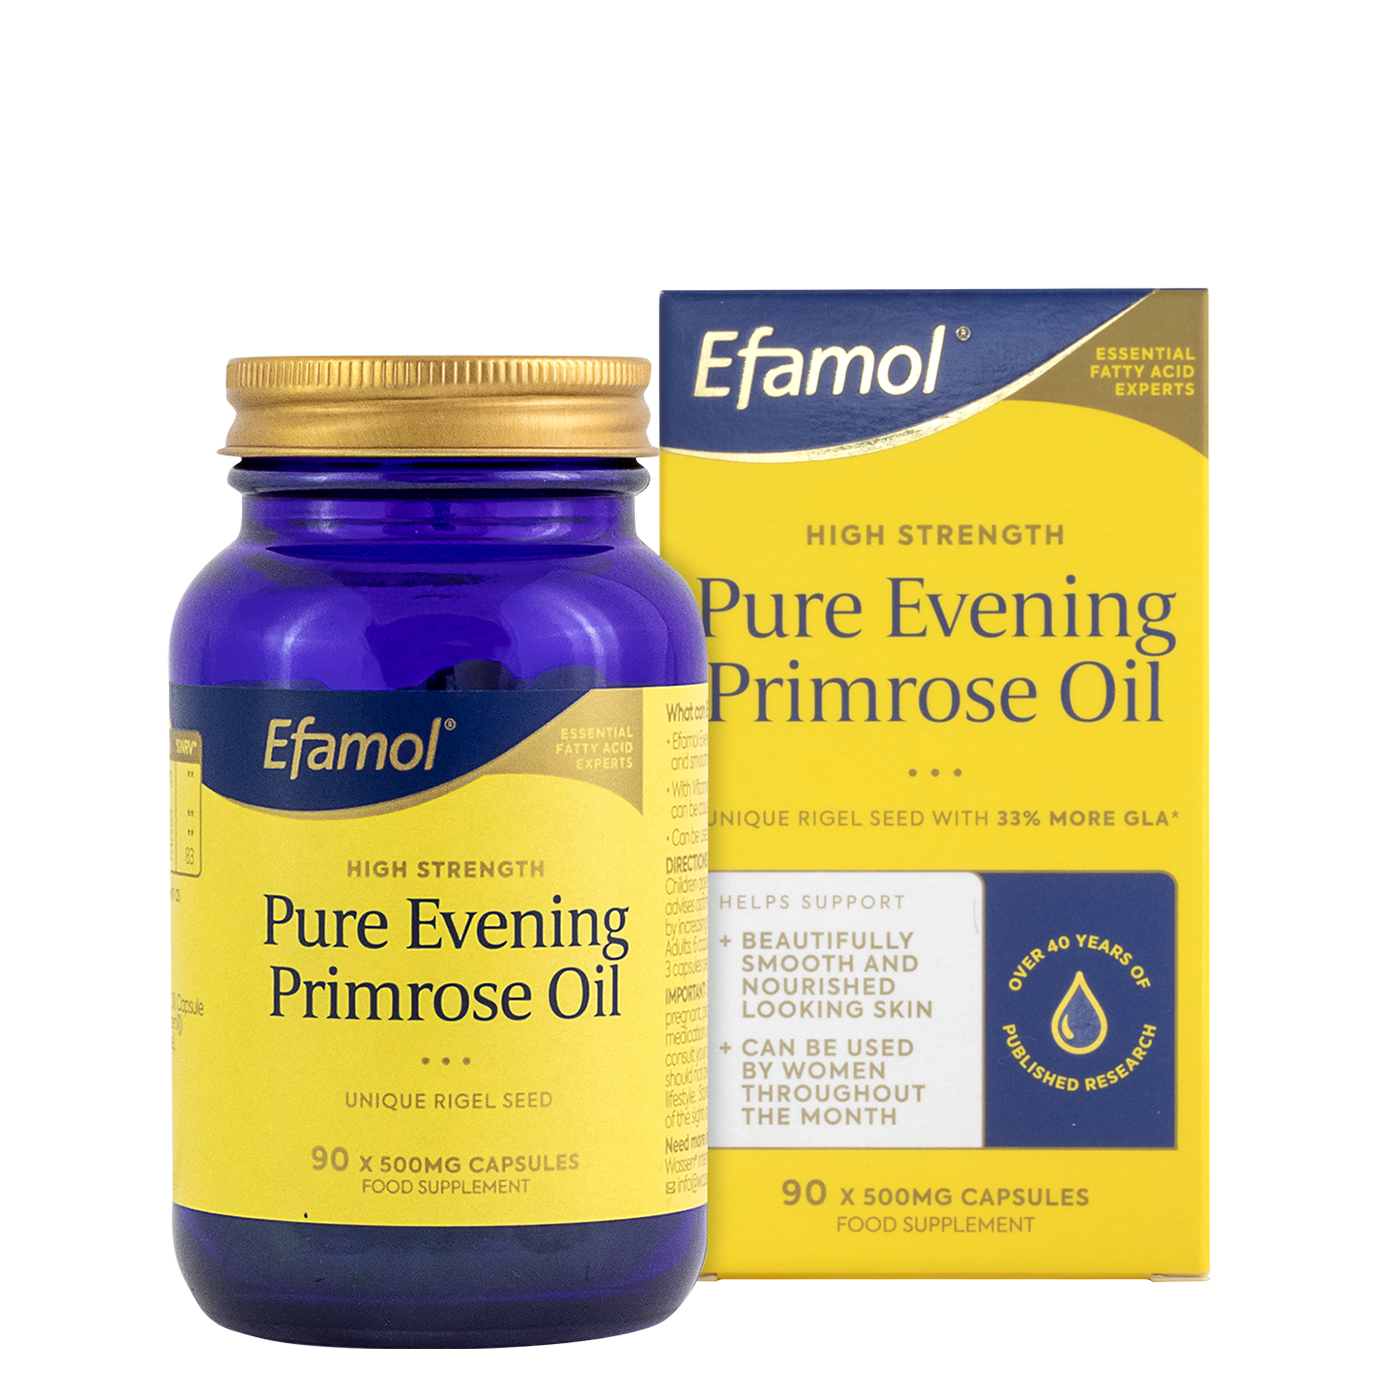 High Strength Pure Evening Primrose Oil Capsules